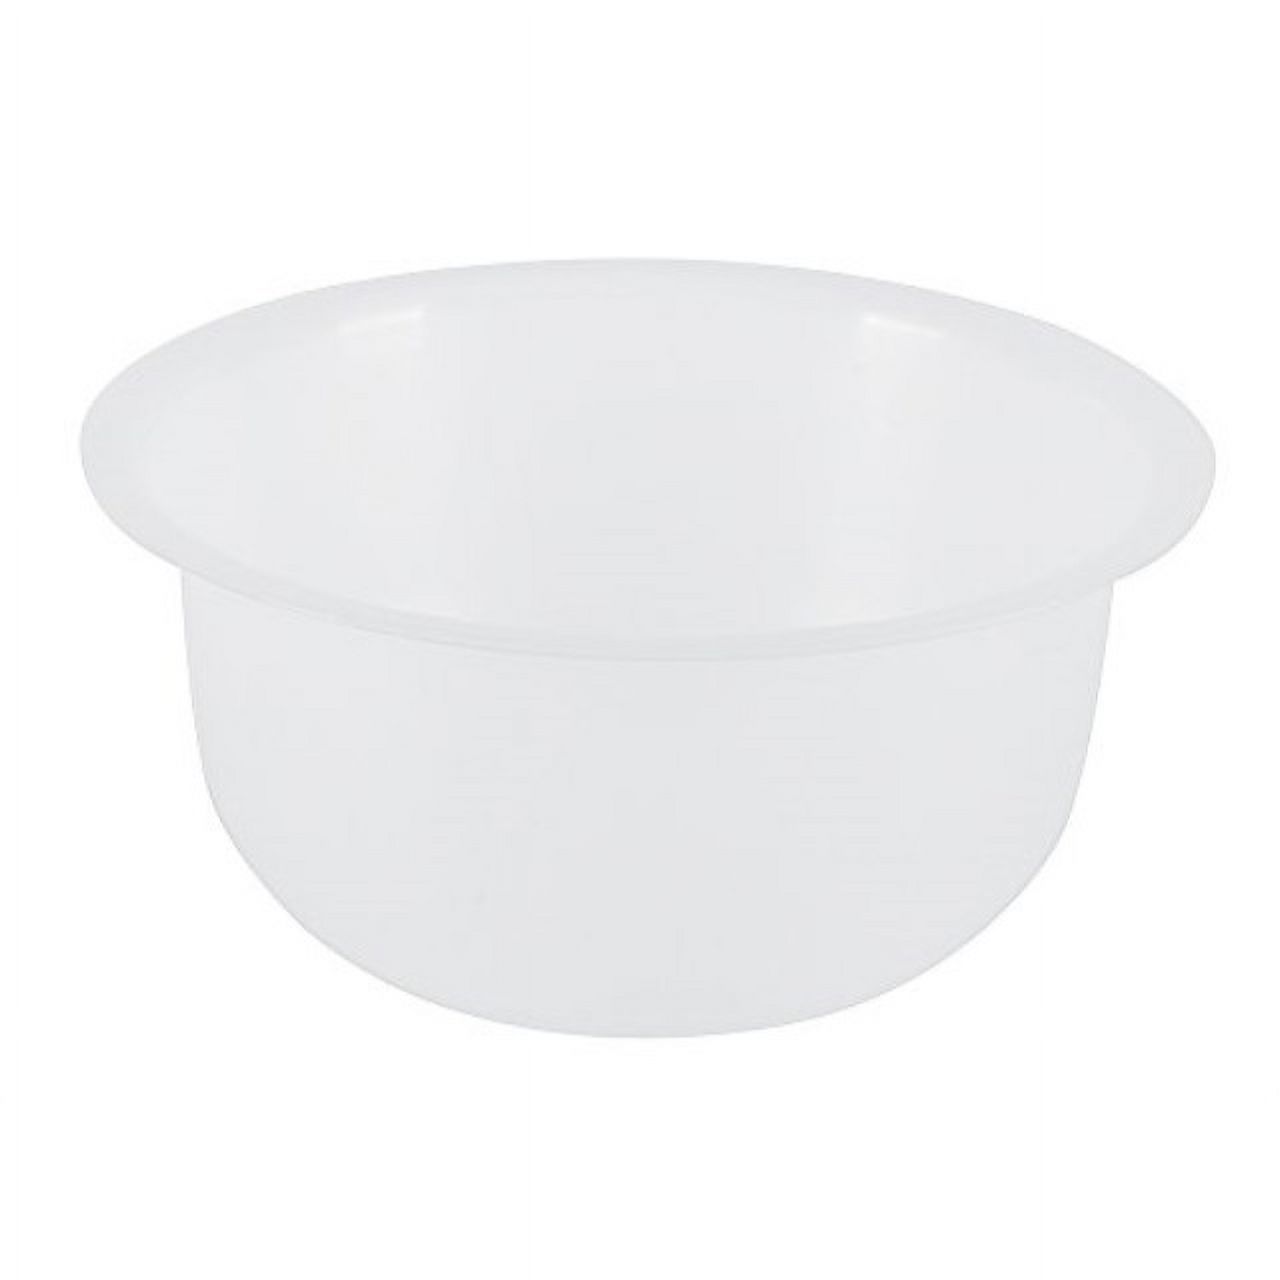 Paderno World Cuisine Polypropylene Mixing Bowl, 434Quart, White - image 1 of 1